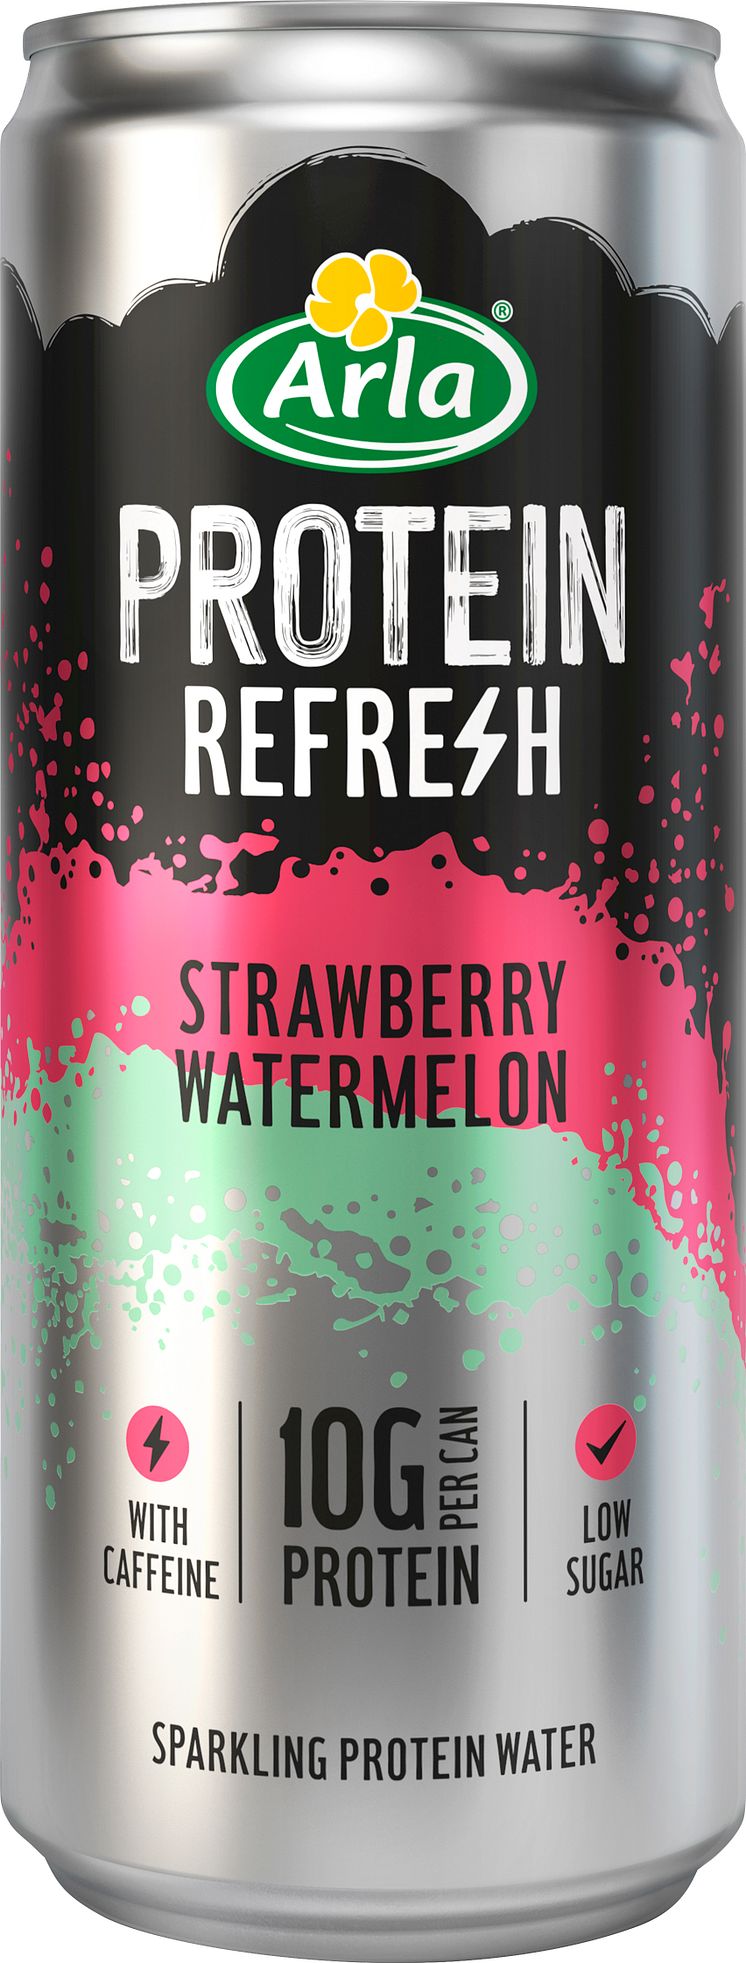 Arla Protein Refresh Strawberry-Watermelon-HiRes